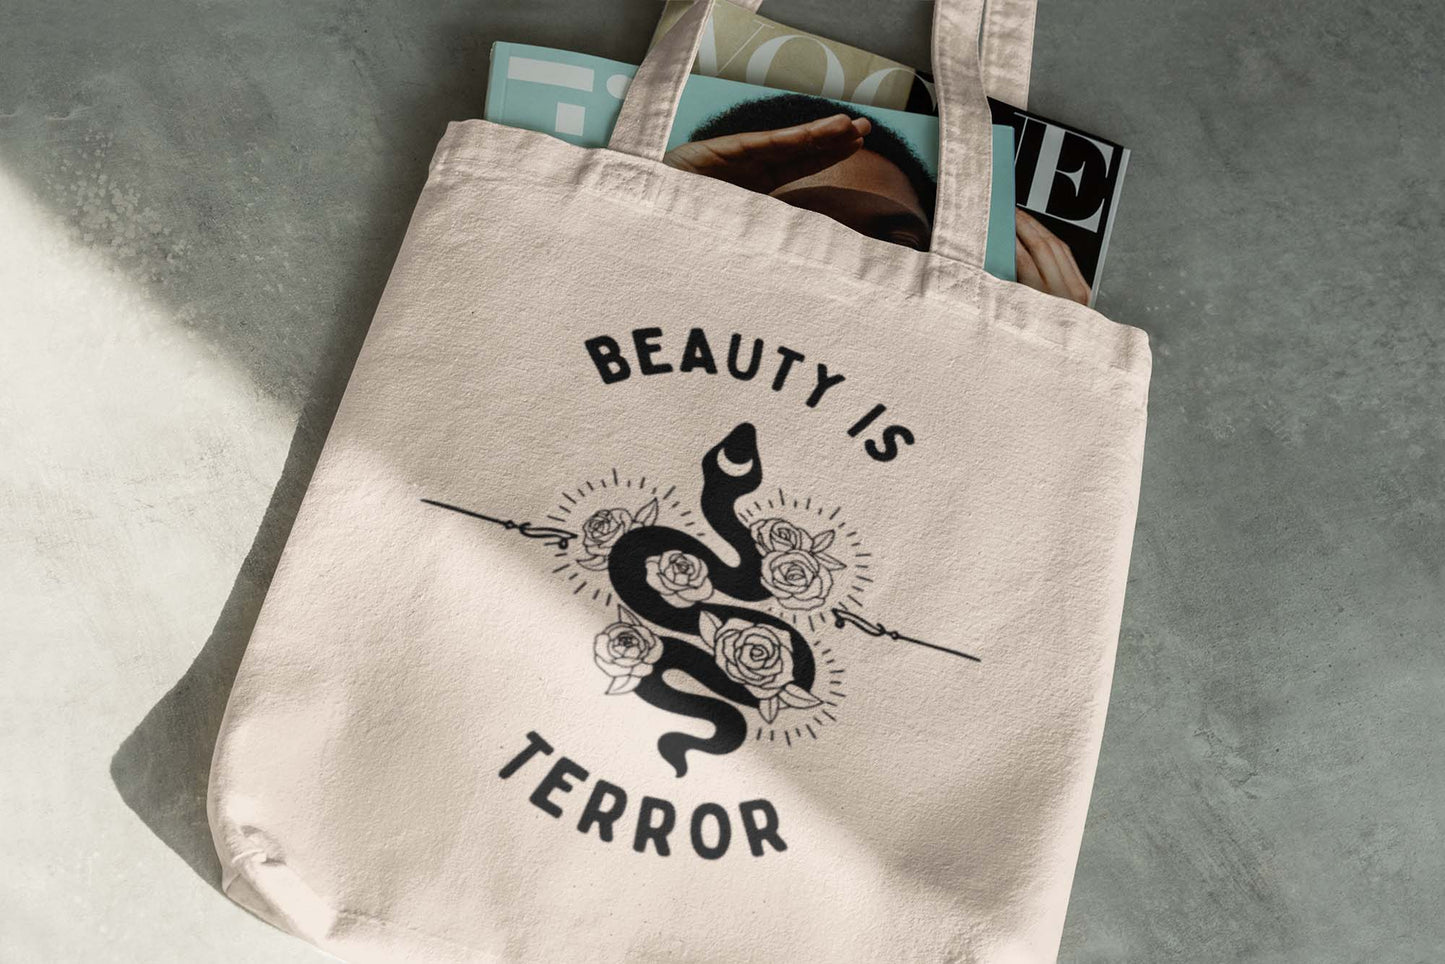 The Secret History Tote Bag, Beauty is Terror, Dark Academia Tote, Donna Tartt